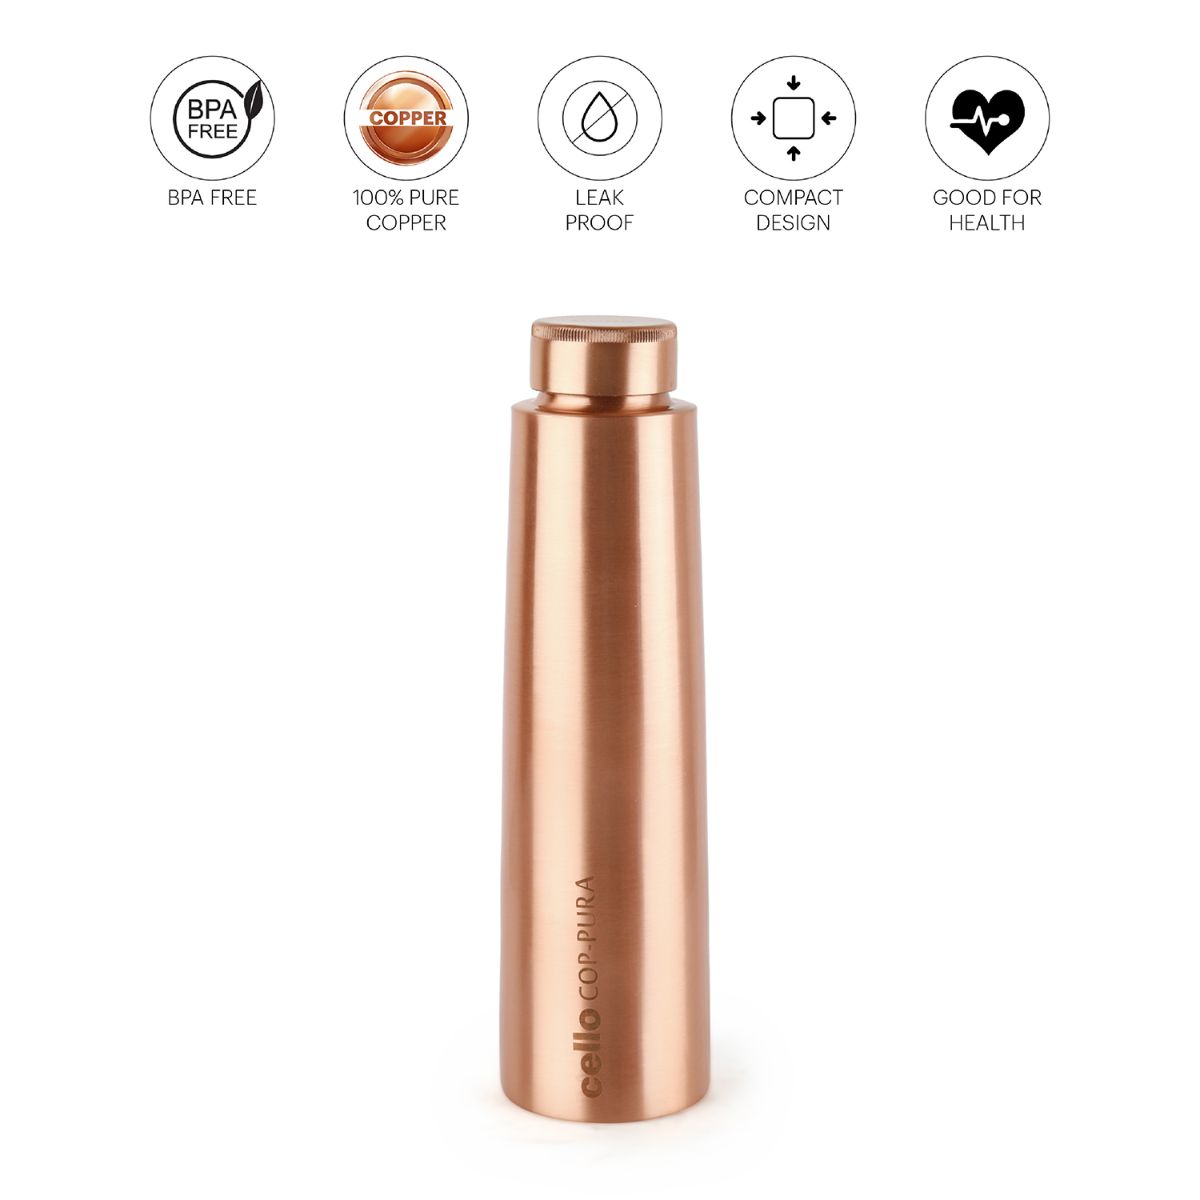 Tattva Copper Water Bottle, 900ml Copper / 900ml